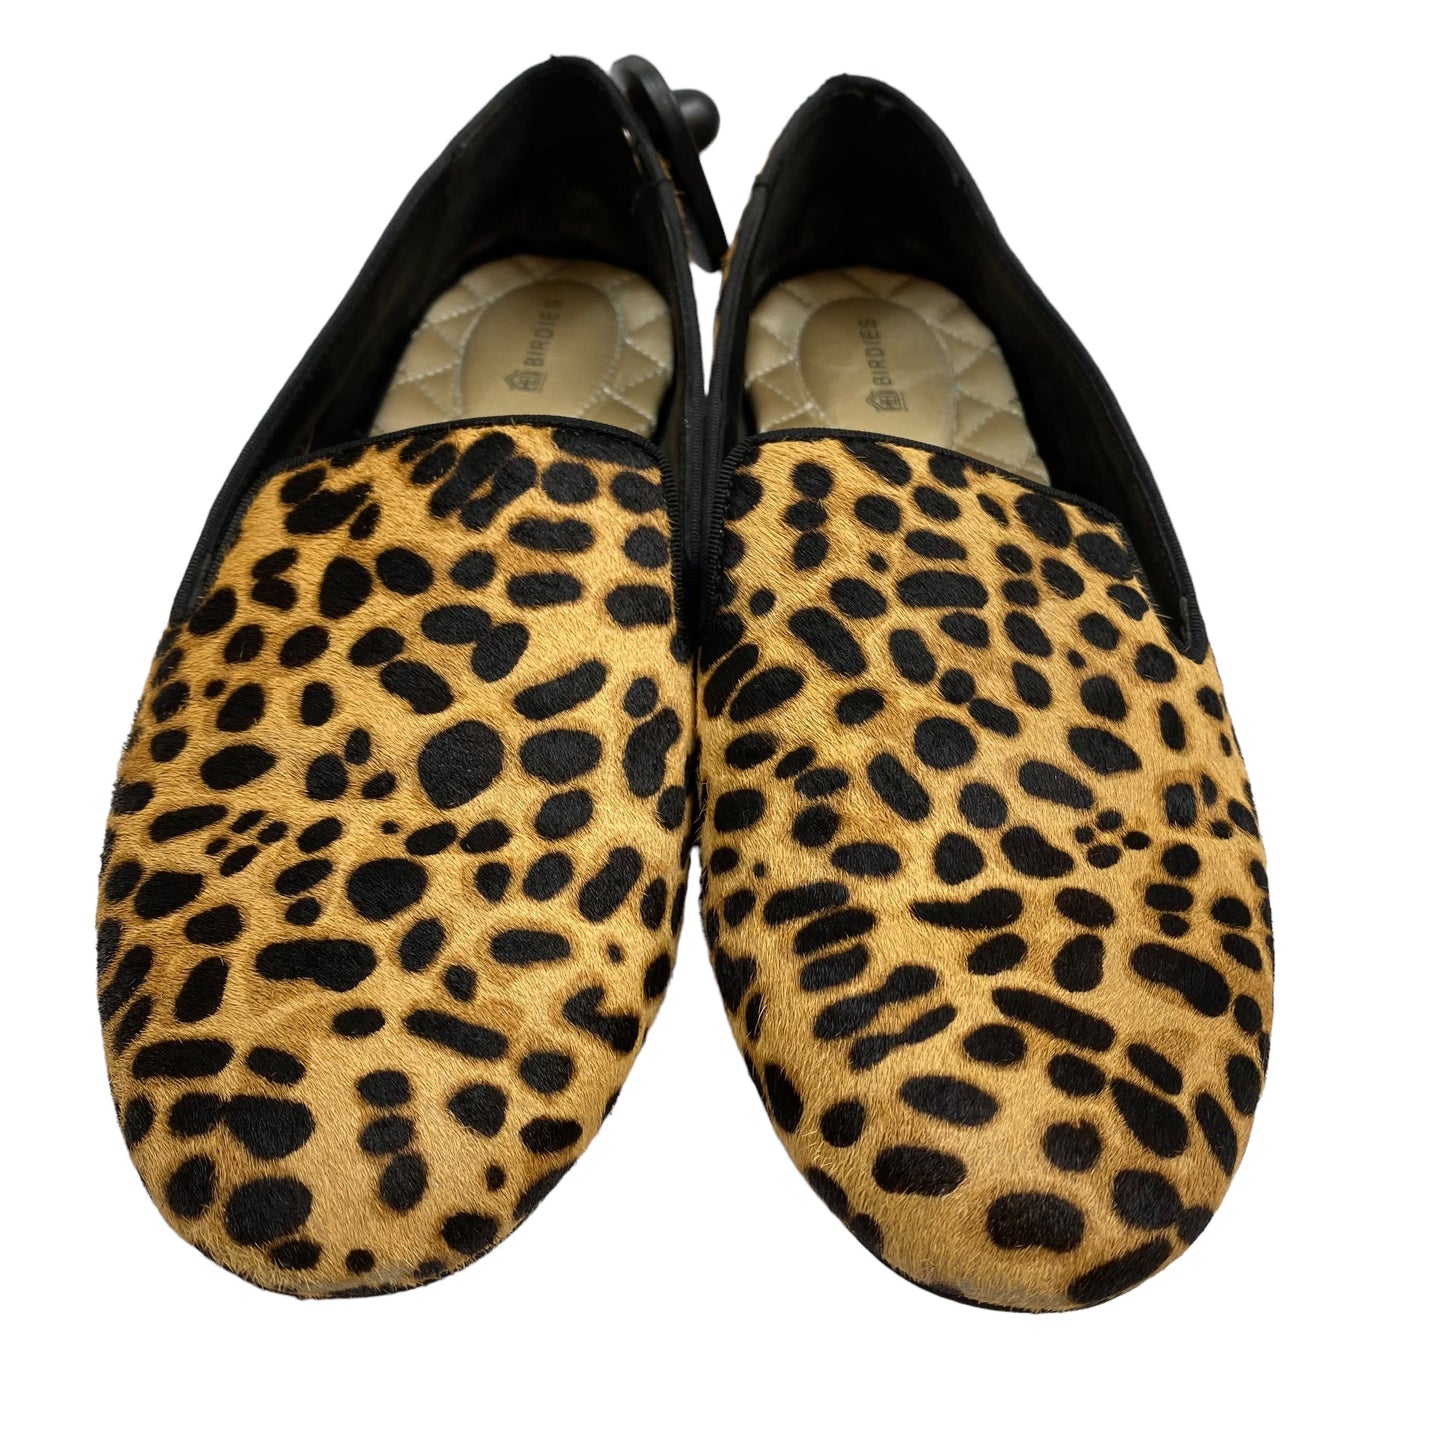 Animal Print Shoes Flats Birdies, Size 8